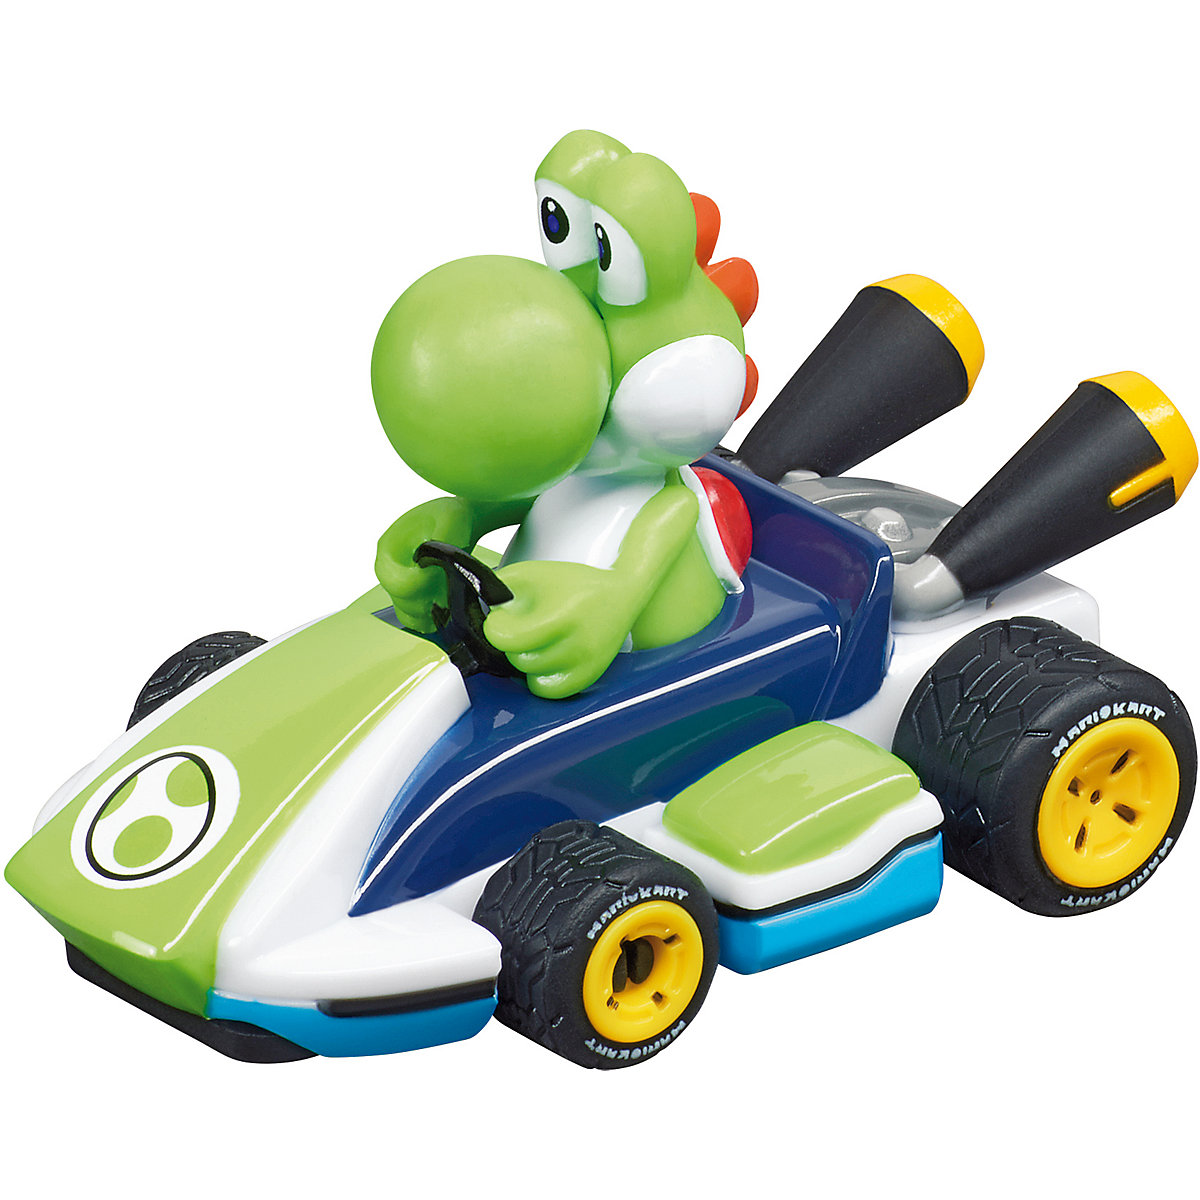 CARRERA FIRST Slot Car Nintendo Mario Kart Yoshi